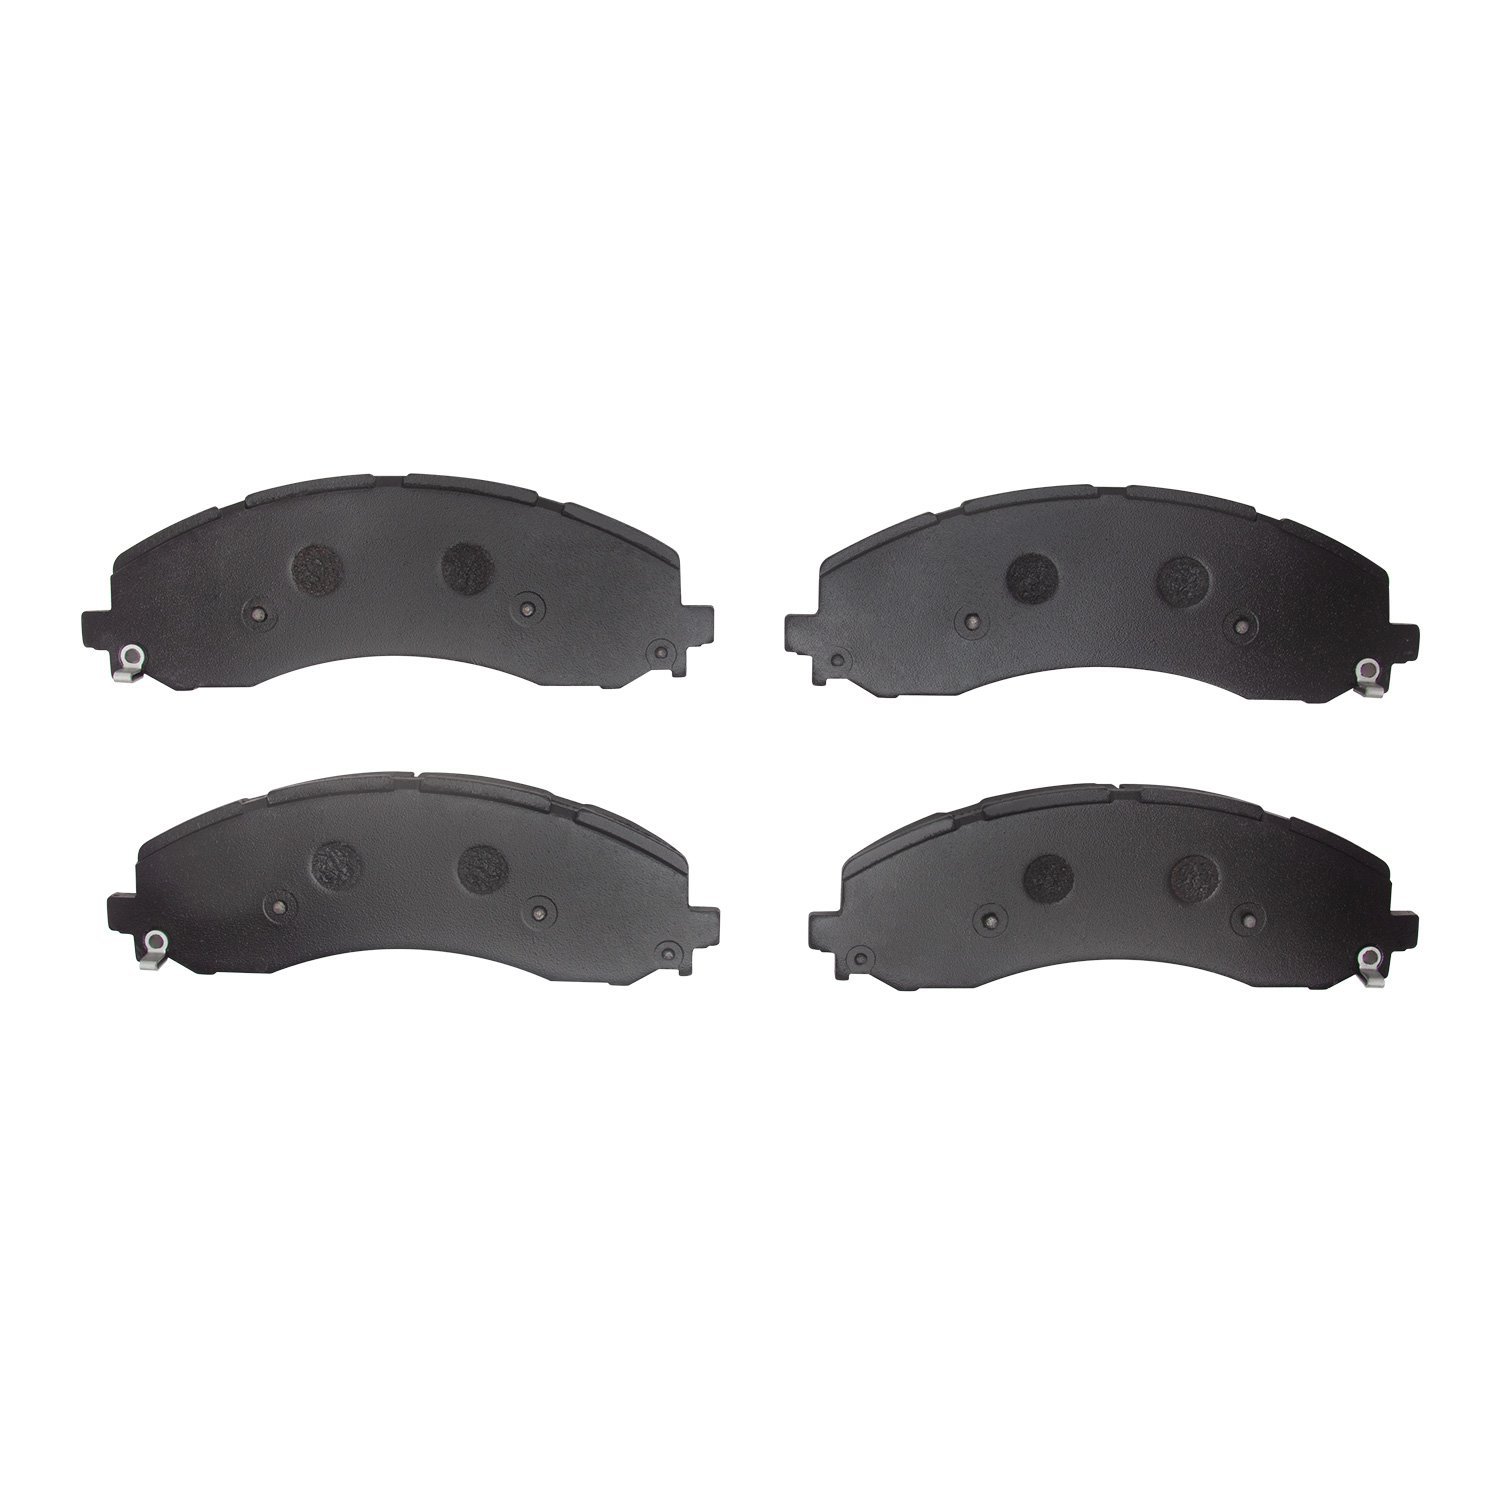 1400-2223-00 Ultimate-Duty Brake Pads Kit, Fits Select Mopar, Position: Front